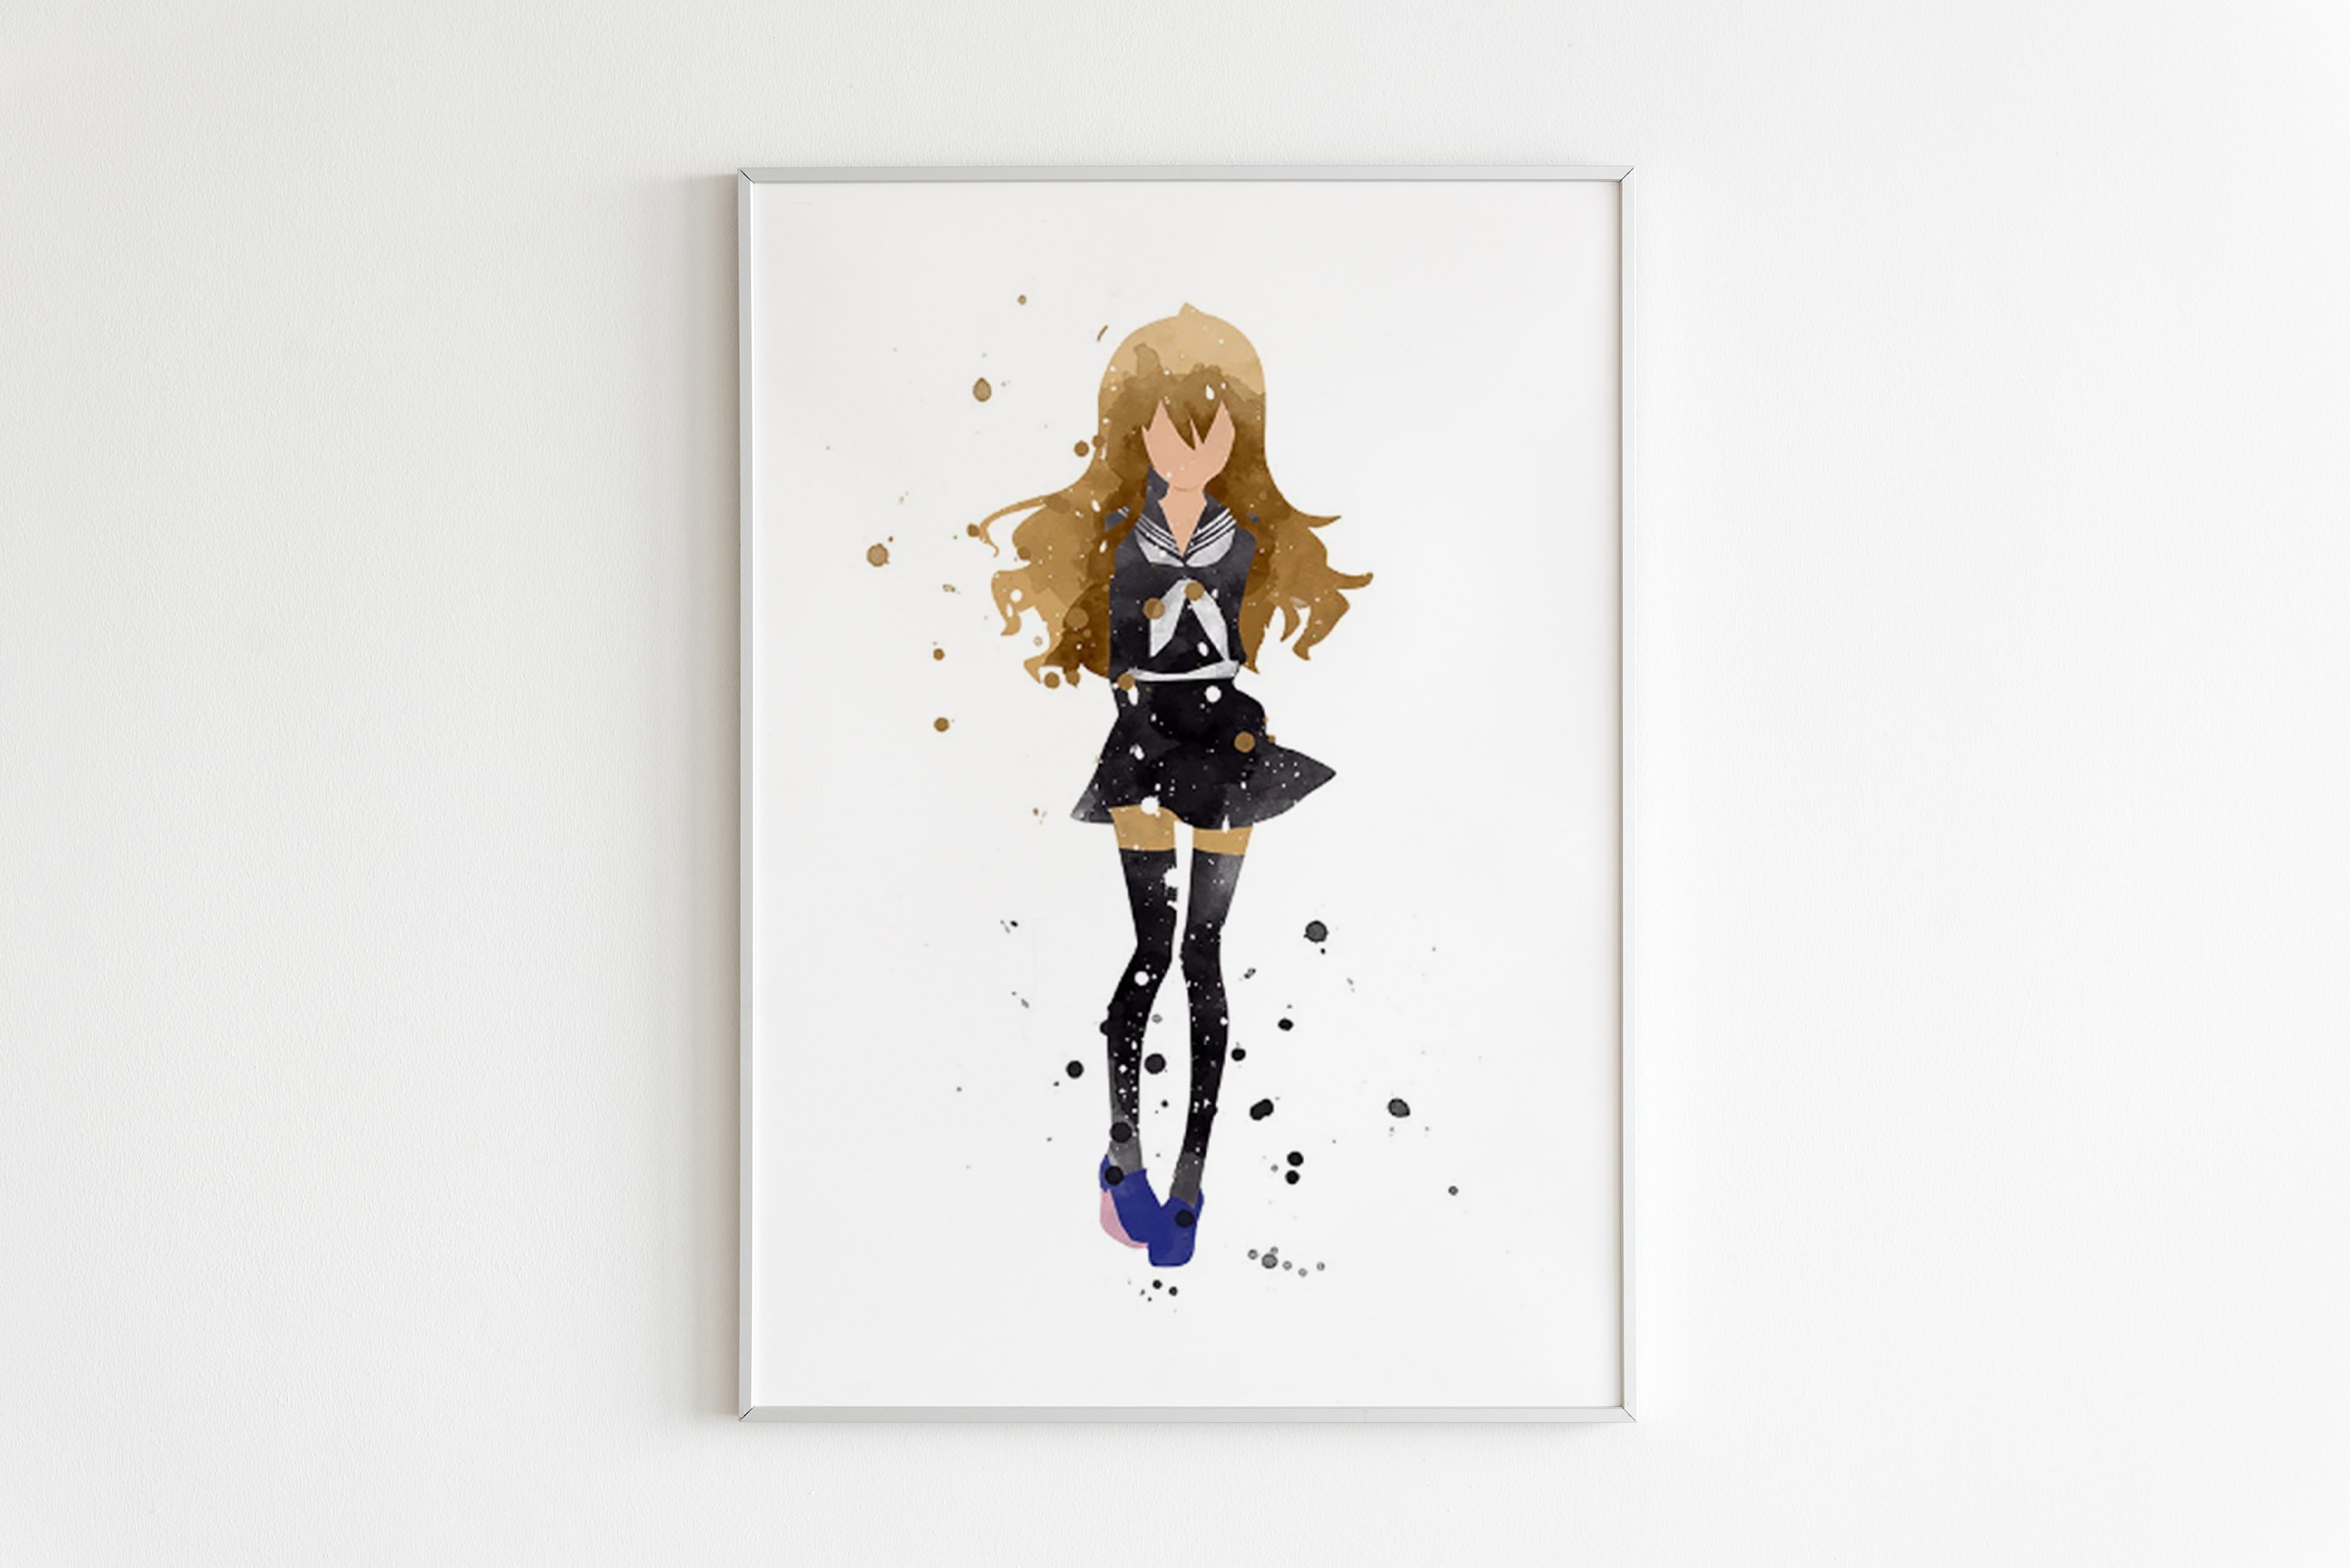 Toradora Anime, Anime Toradora Decorations, Canvas Wall Art Posters